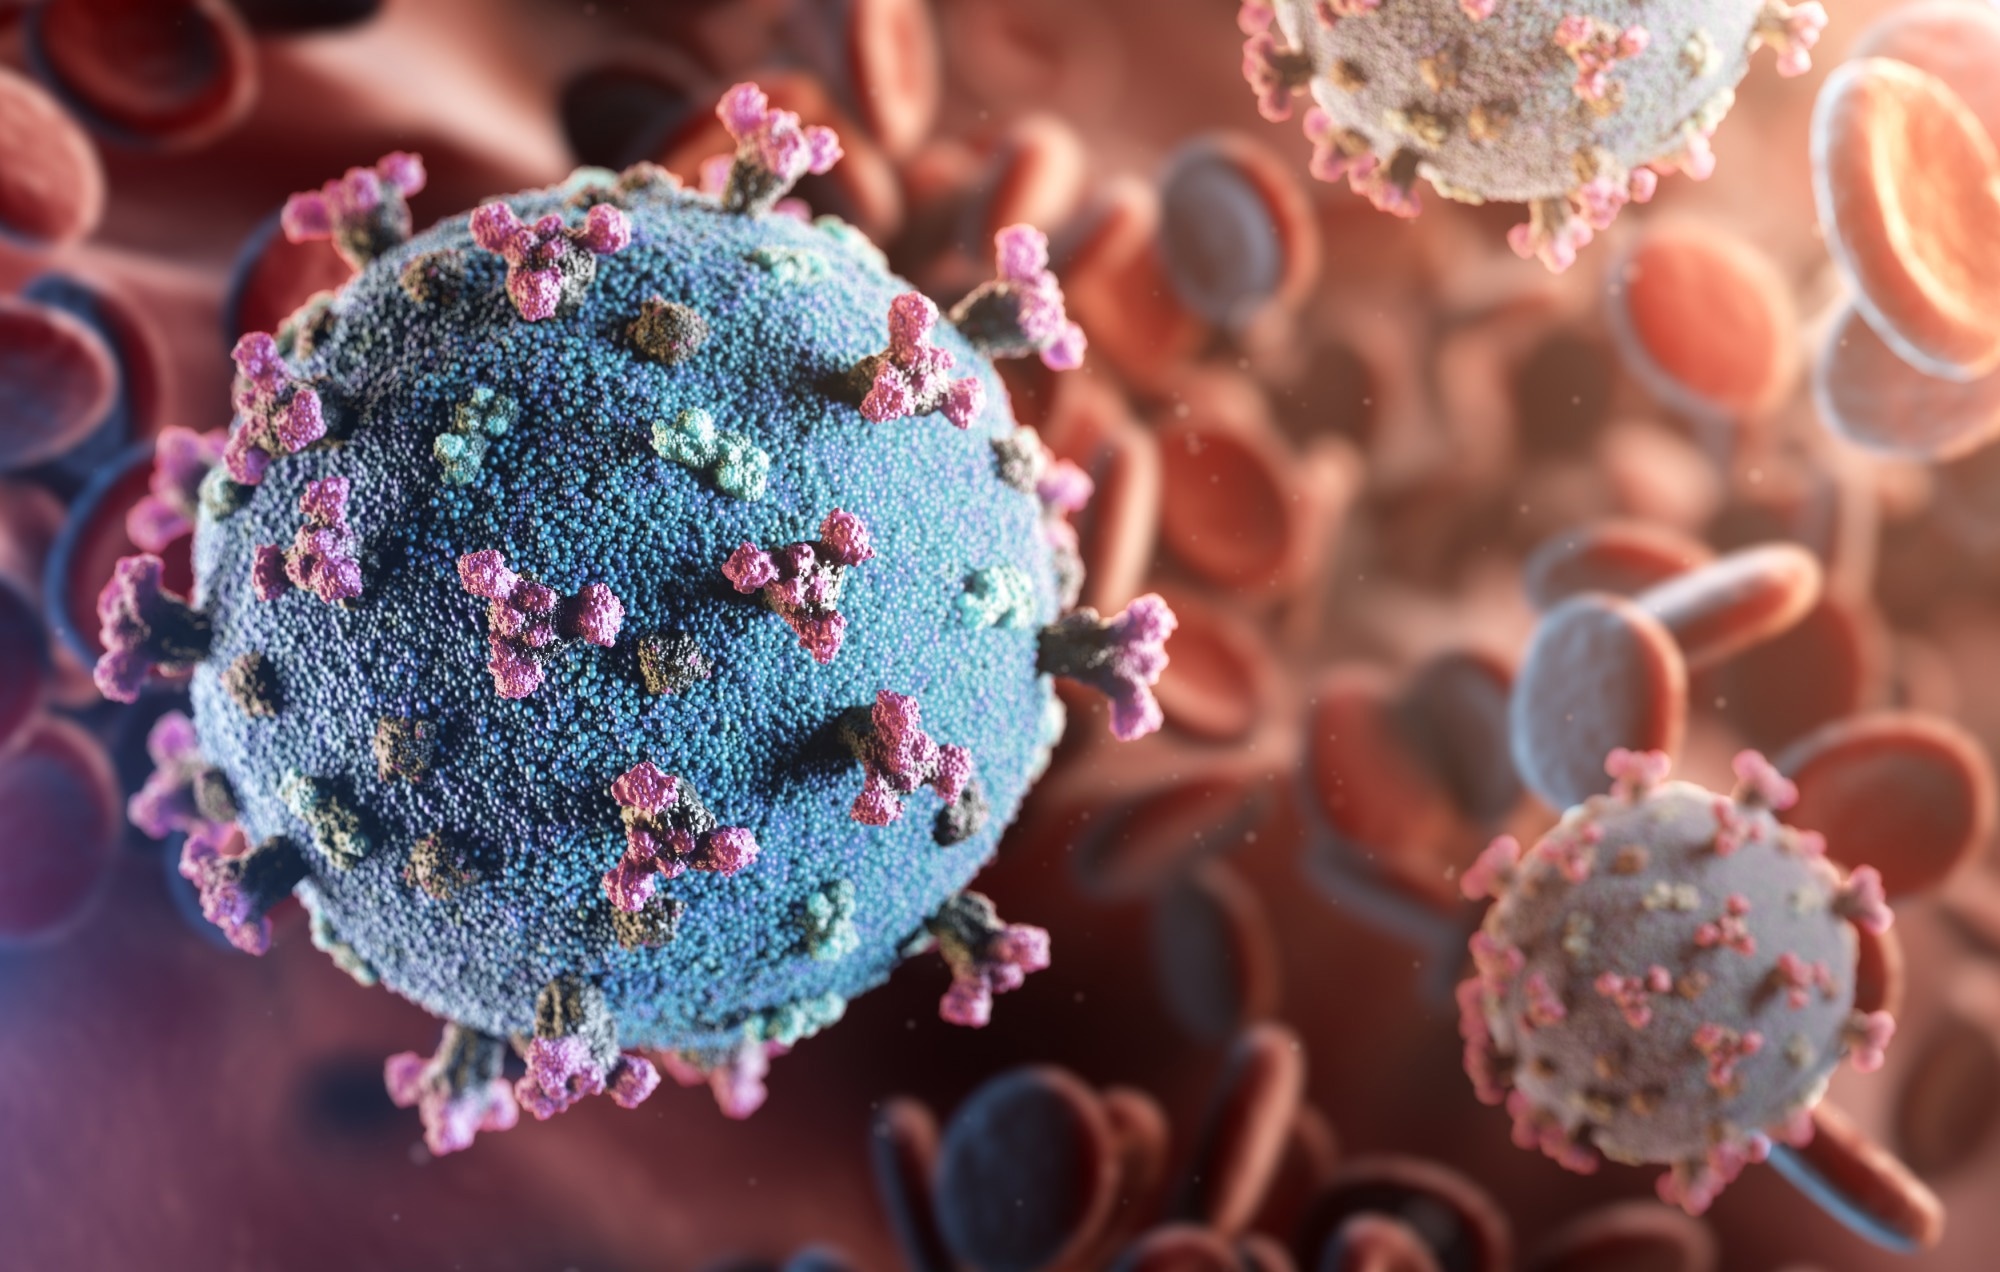 Study: Effect of molnupiravir on SARS-CoV-2 evolution in immunocompromised patients: a retrospective observational study. Image Credit: creativeneko / Shutterstock